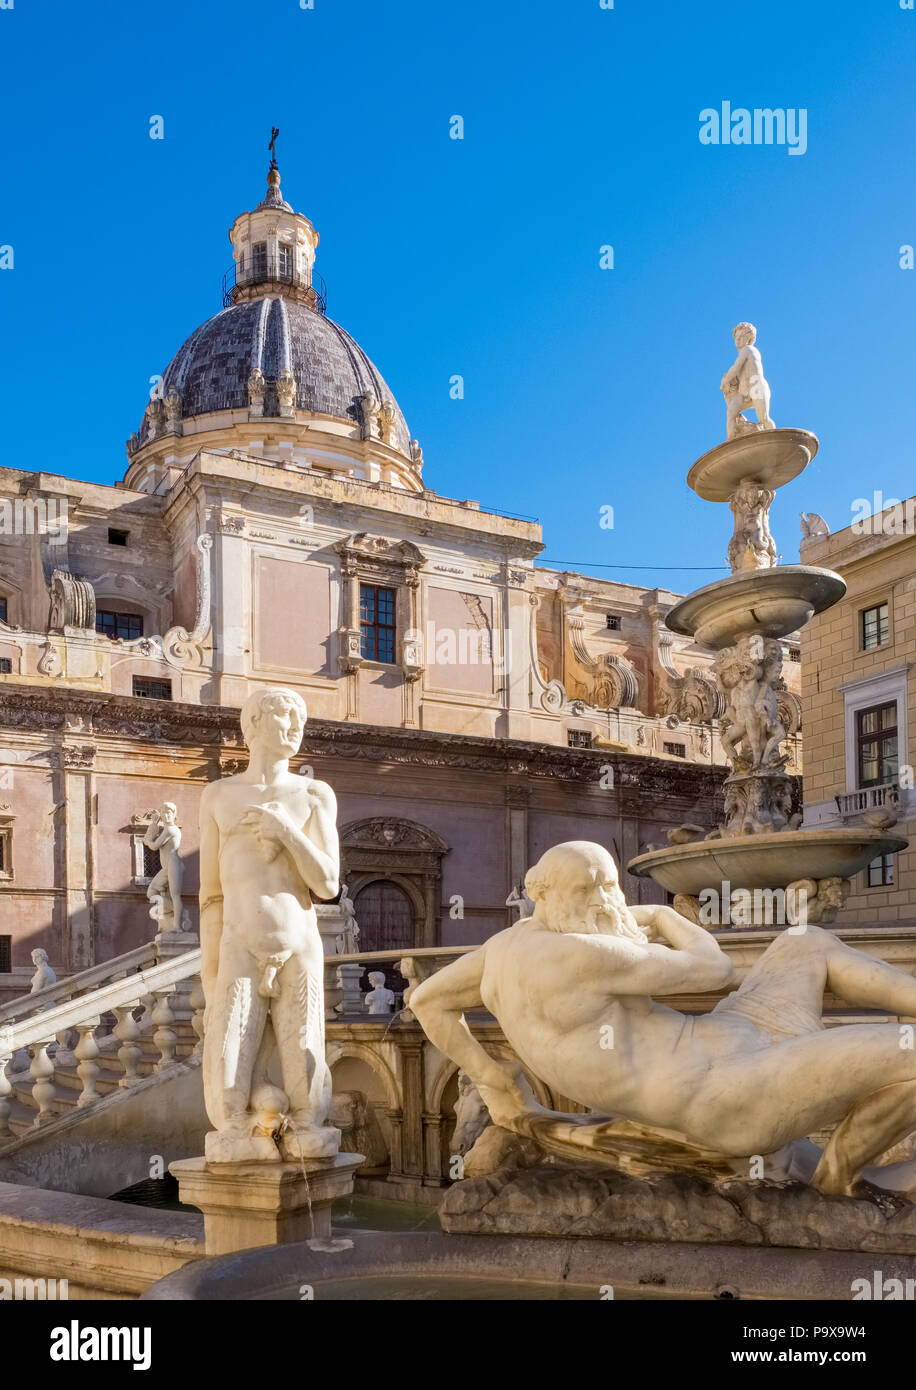 The Fontana Pretoria, Praetorian Fountain, on Piazza Pretoria in Palermo, Sicily, Italy, Europe Stock Photo